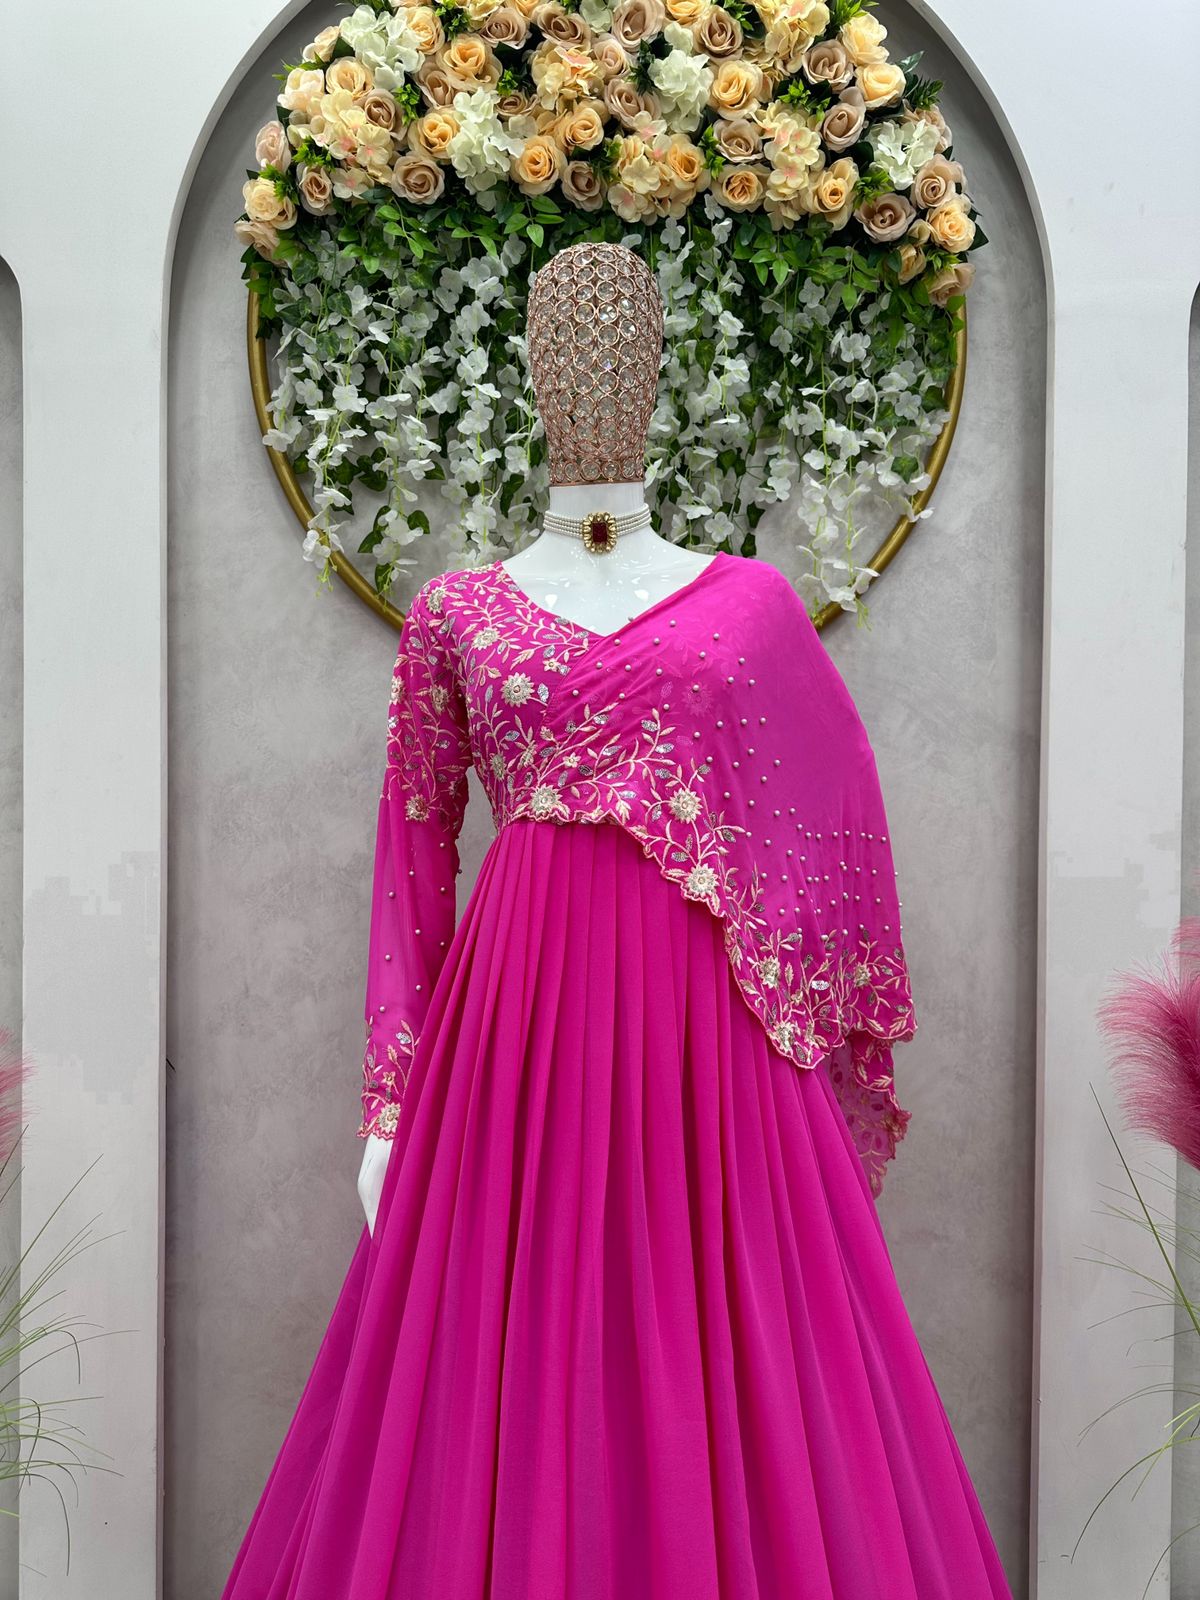 When Shivangi Joshi dresses in pink